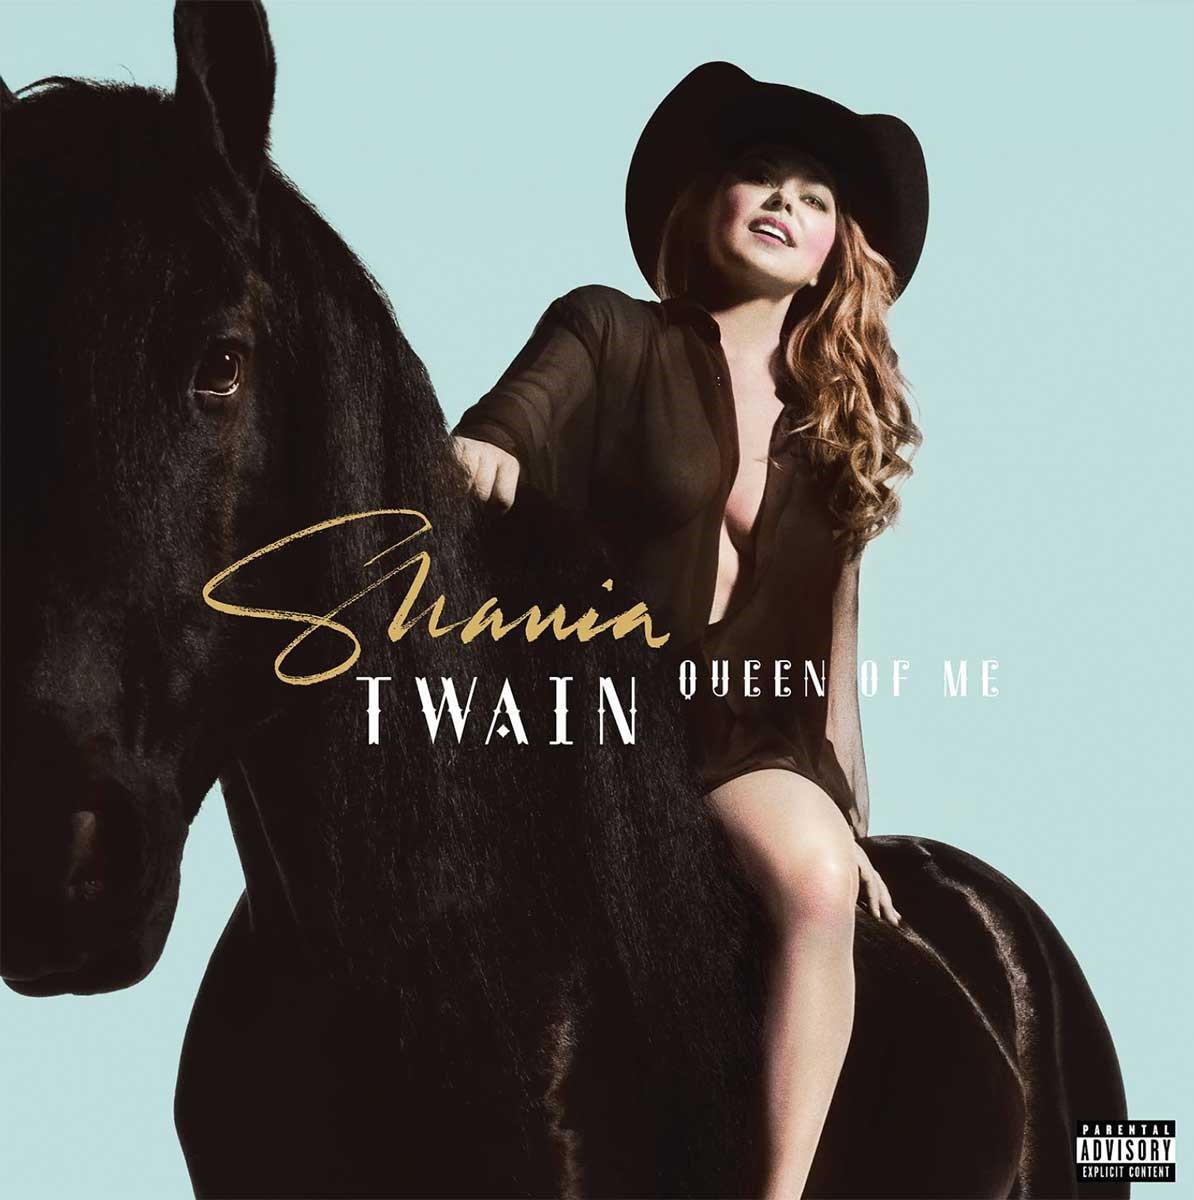 Shania Twain nuovo album e tour - immagini